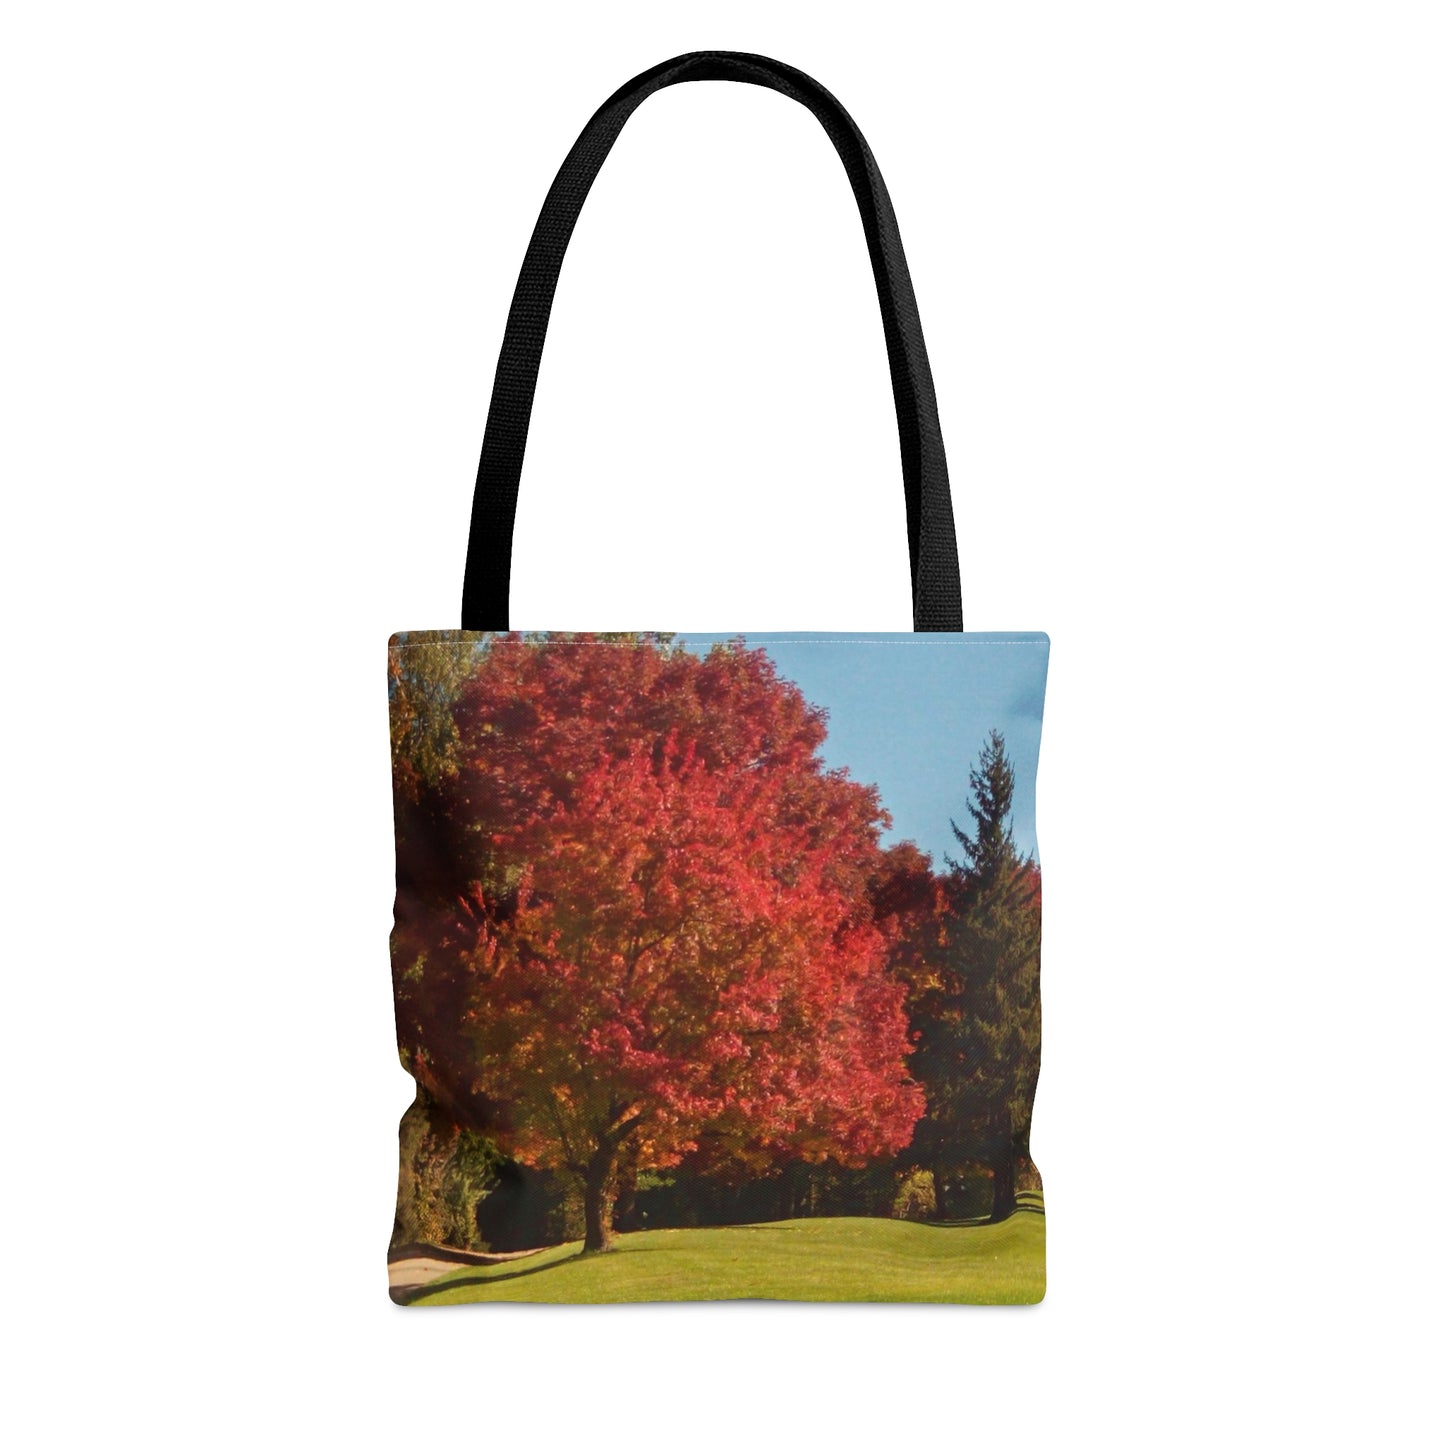 Autumn Lawn Tote Bag